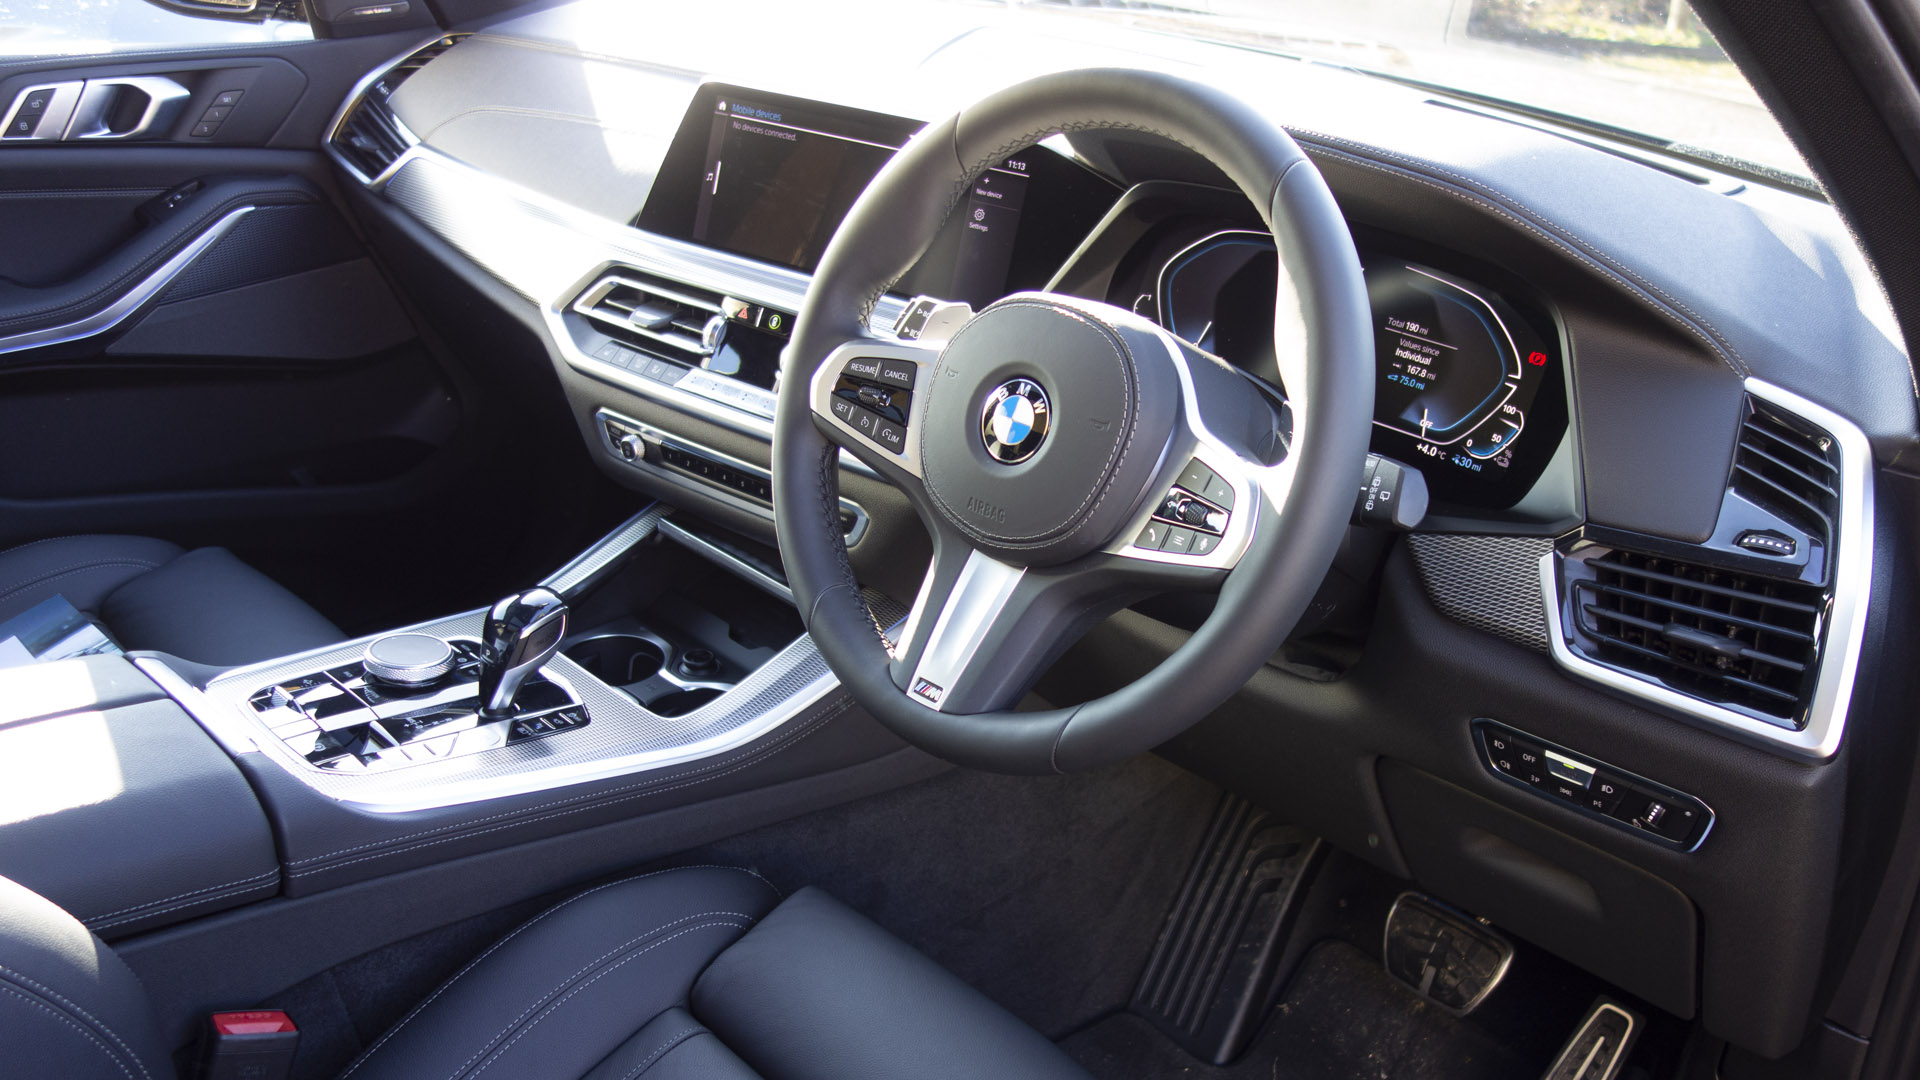 BMW X5 xDrive45e inside